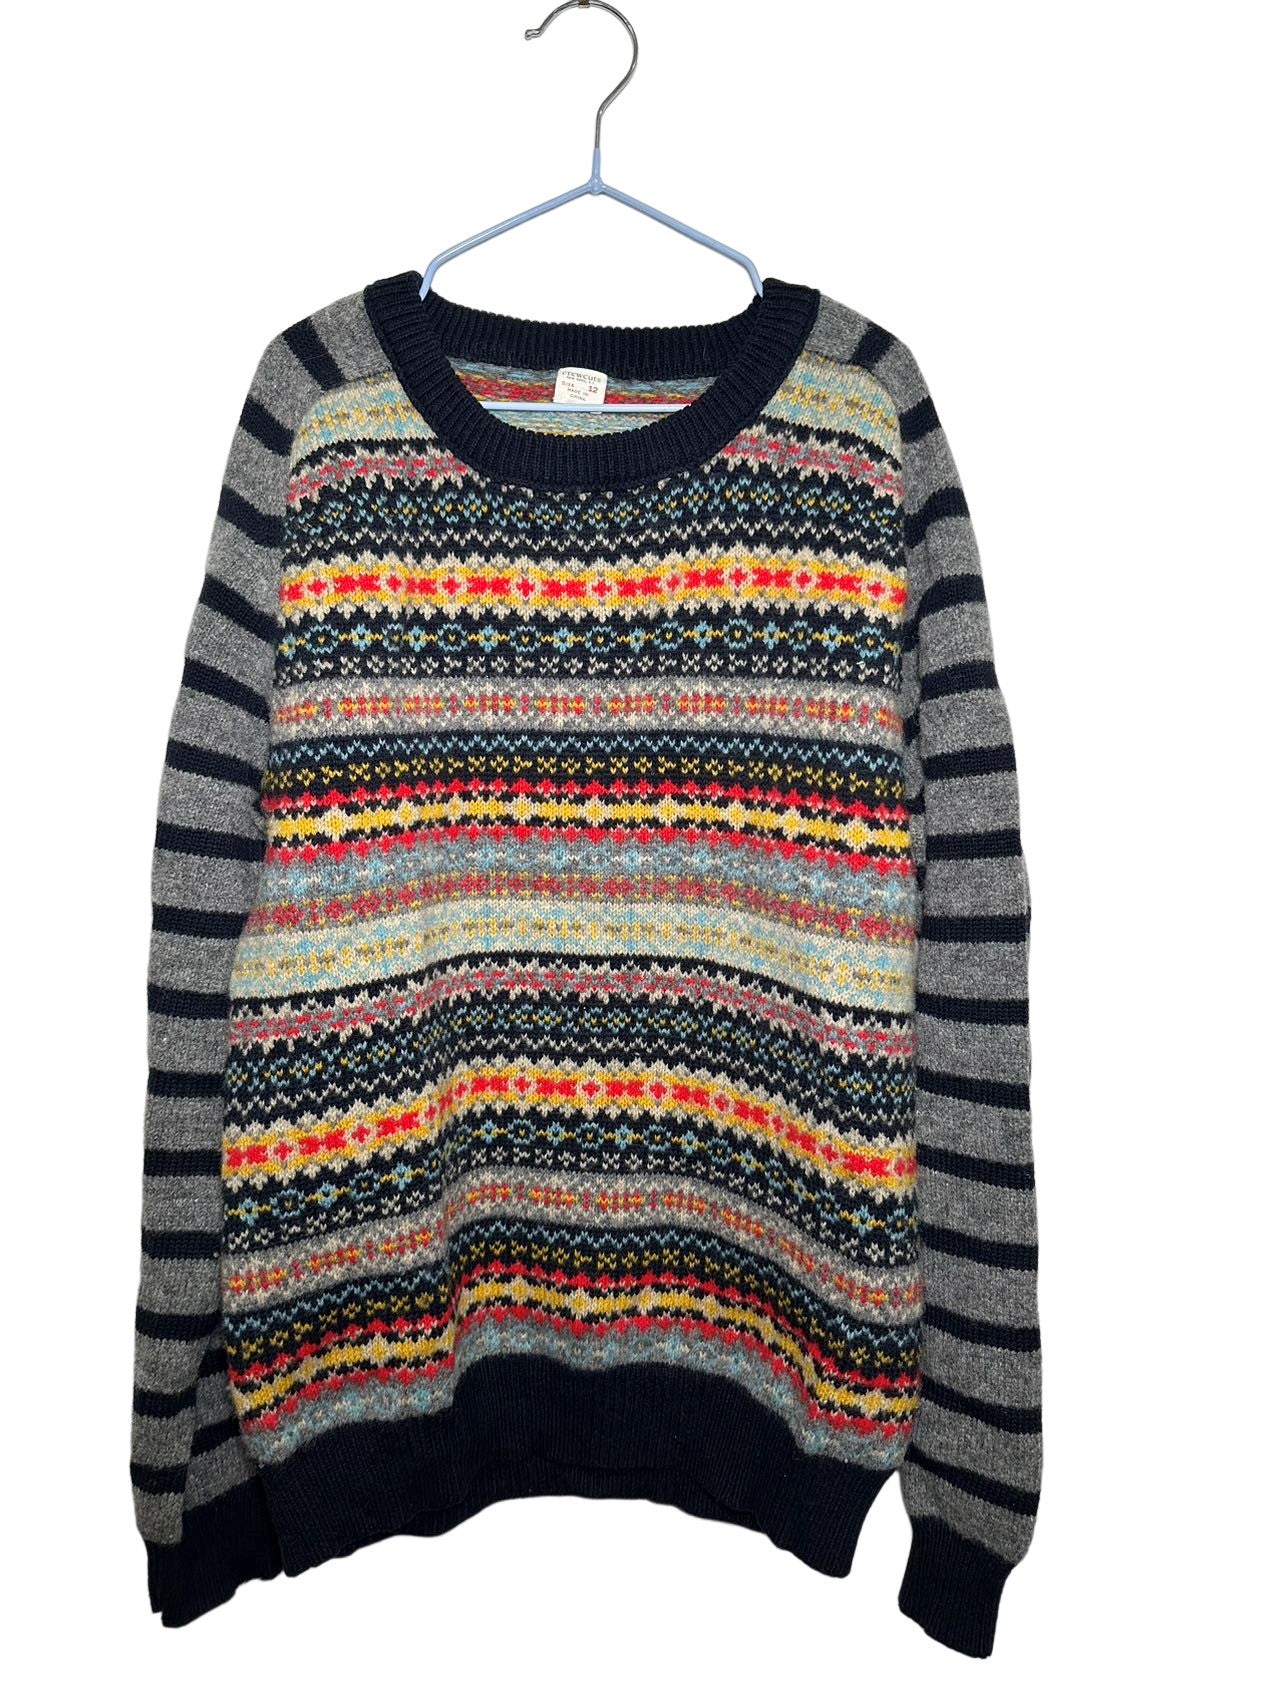 Crewcuts Sweater (12Y)